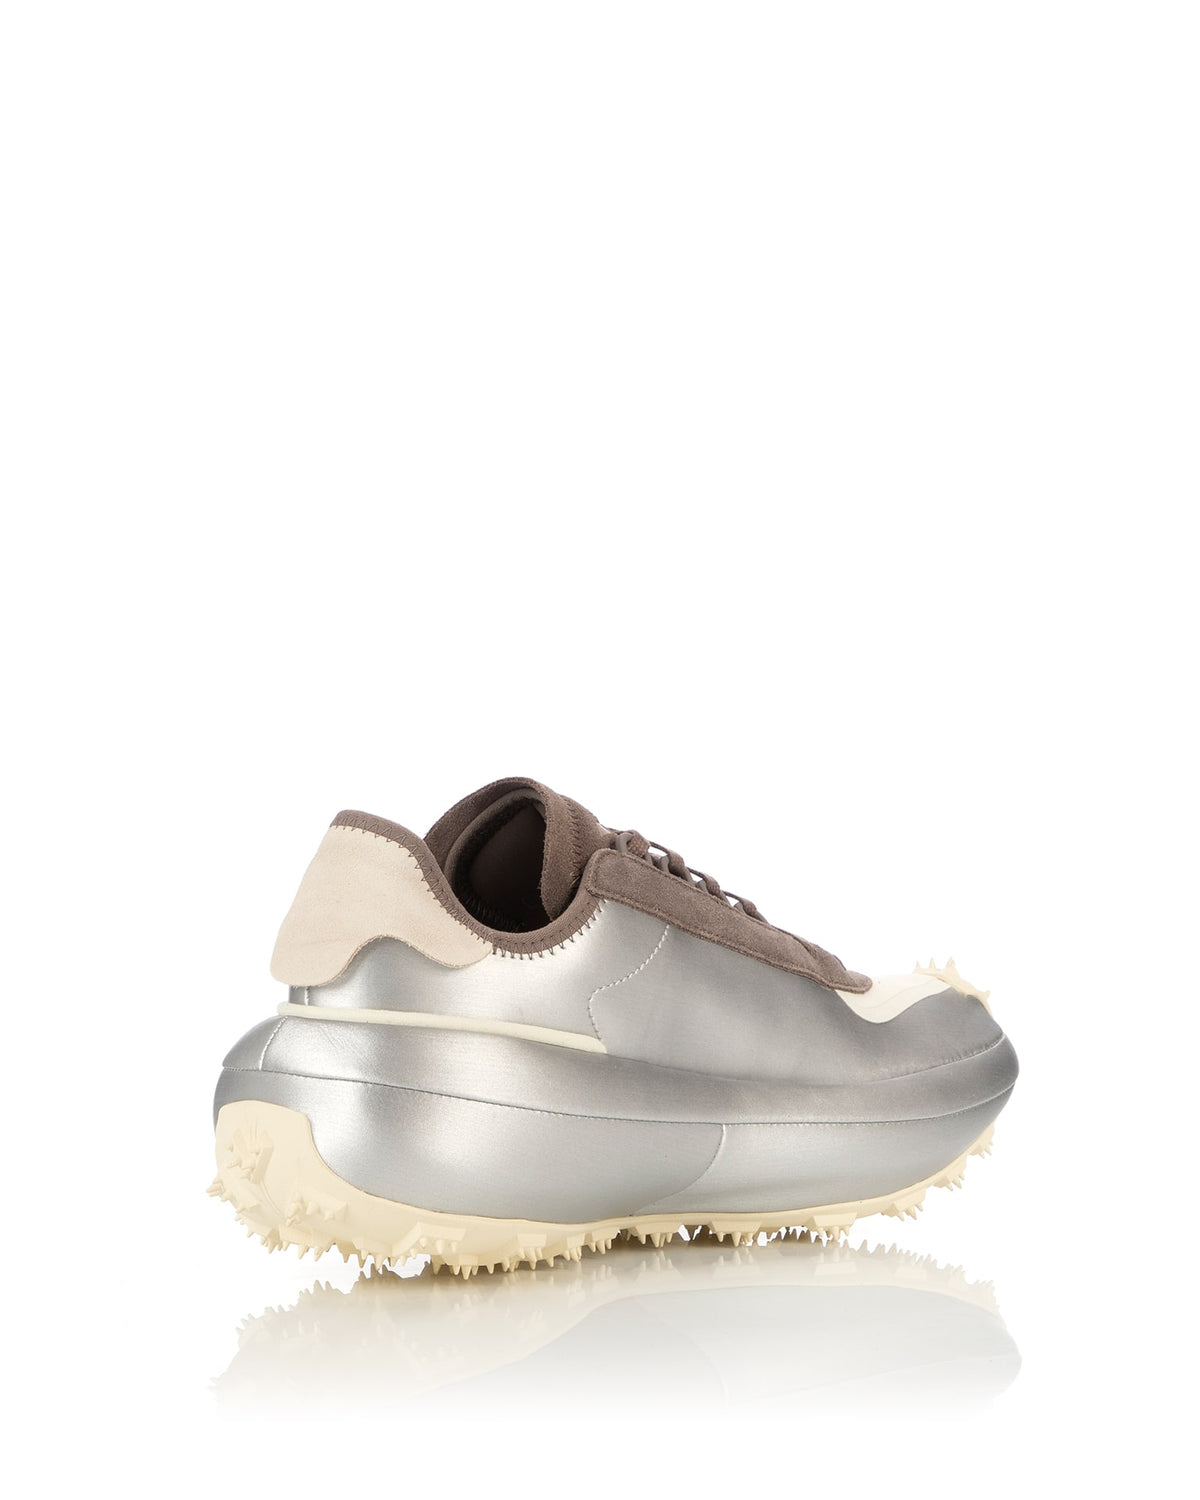 adidas Y-3 | Makura Tech Earth / Cream White - Concrete